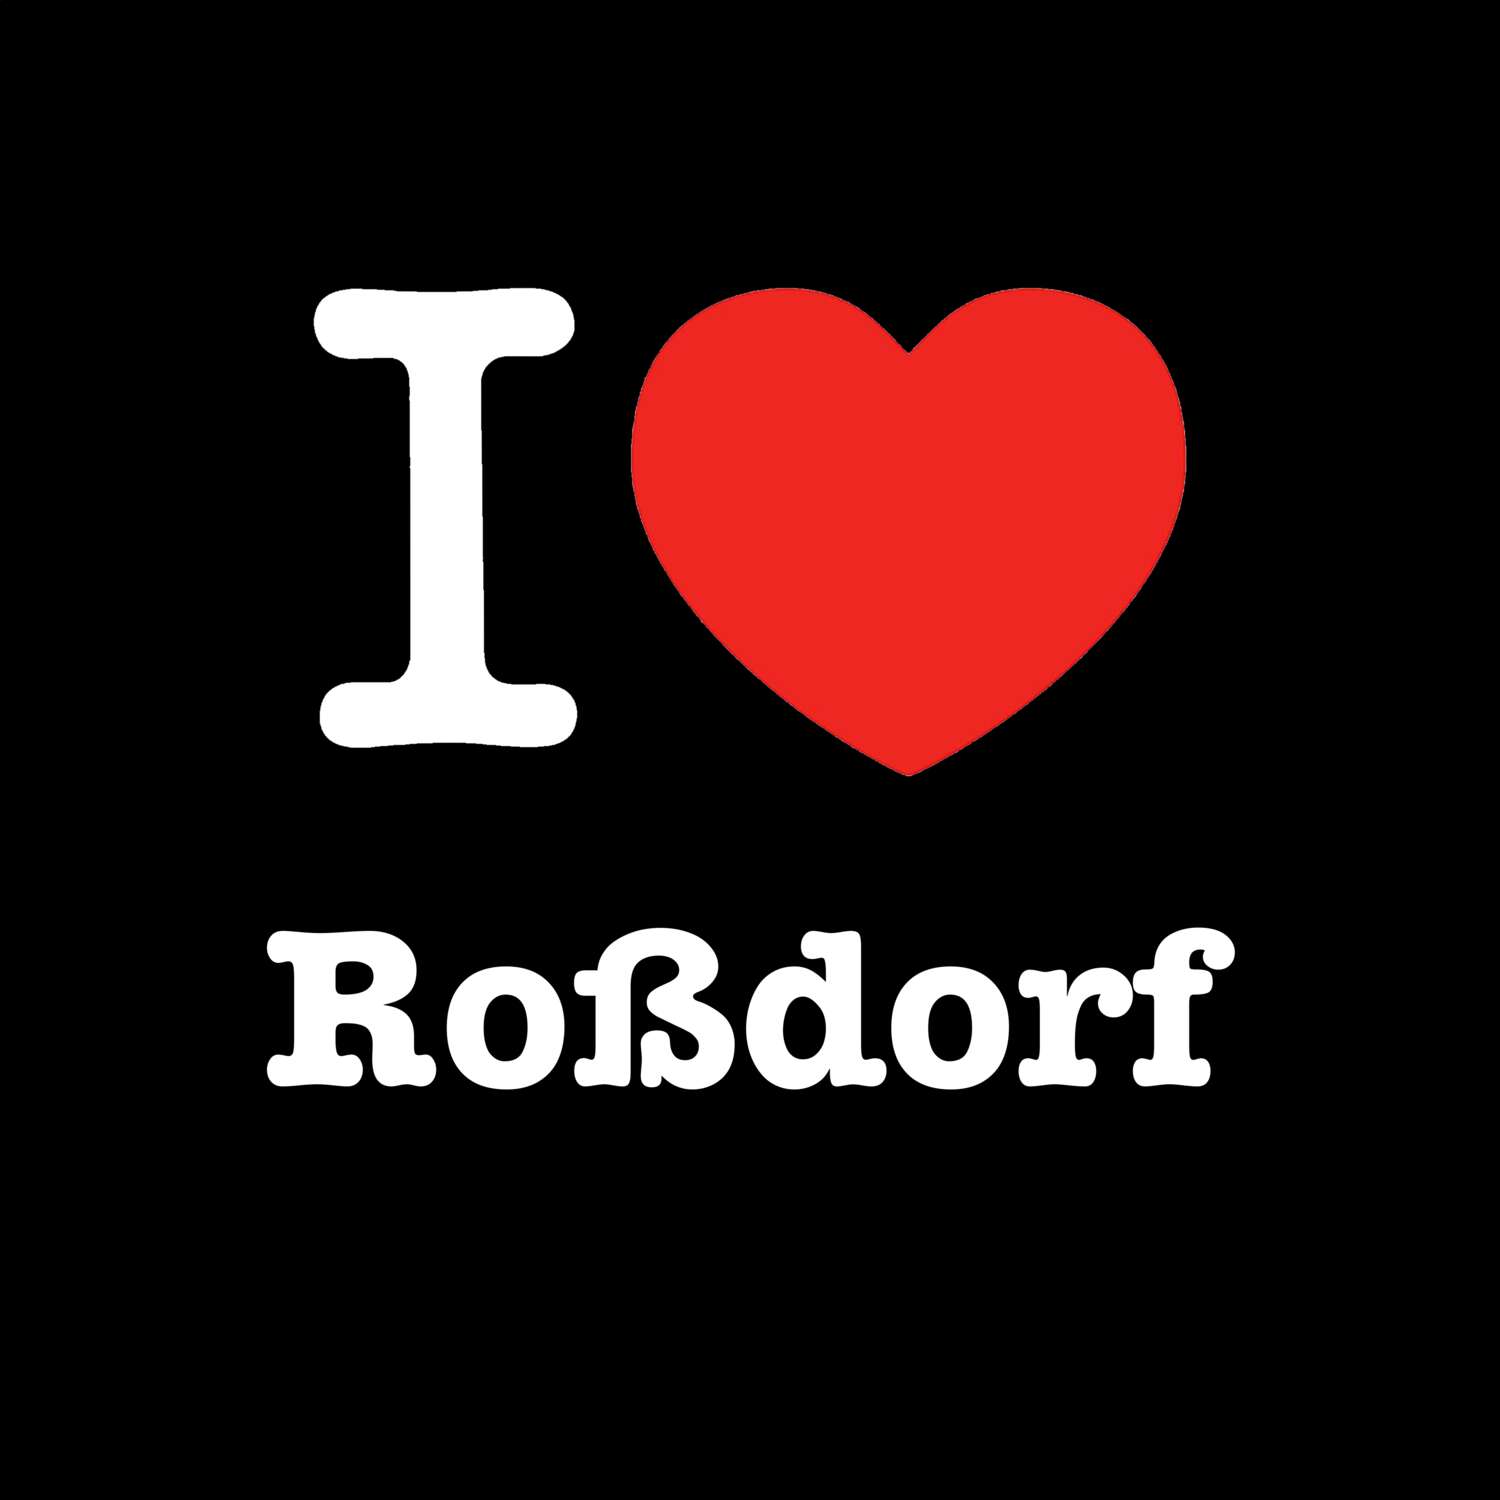 Roßdorf T-Shirt »I love«